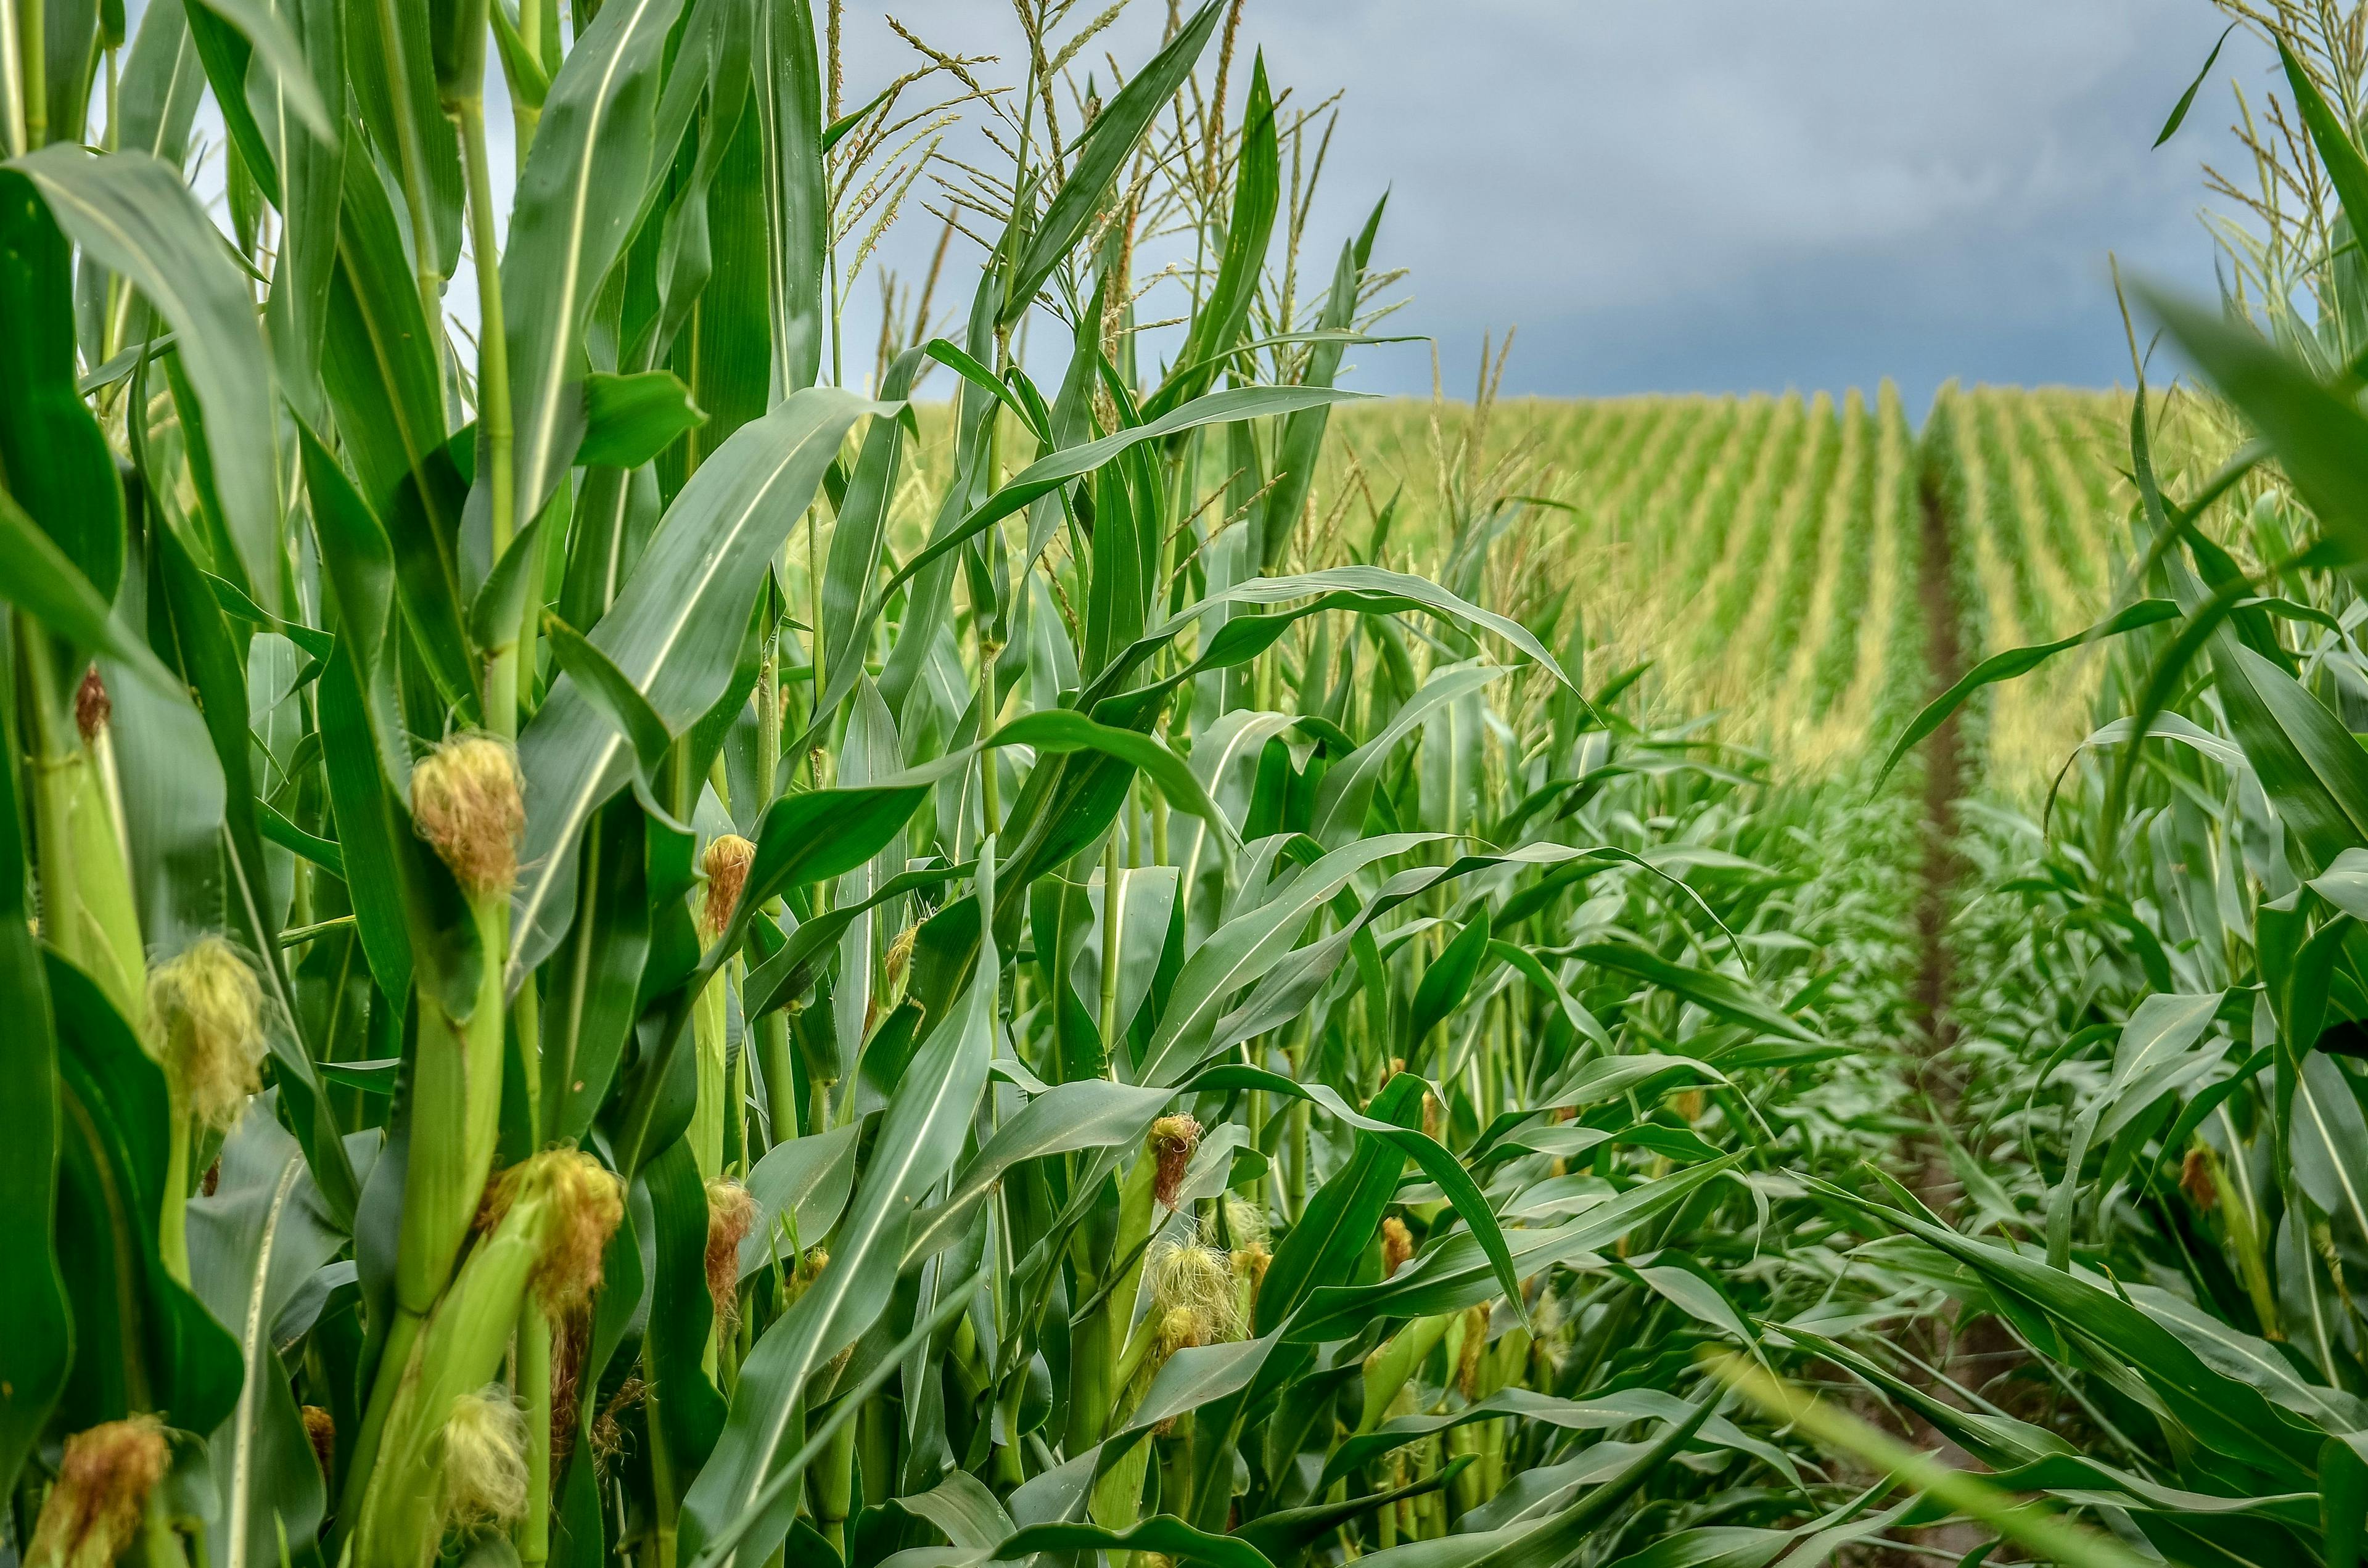 Green corn field with corn cobs close up | Image Credit: © kyrychukvitaliy - stock.adobe.com